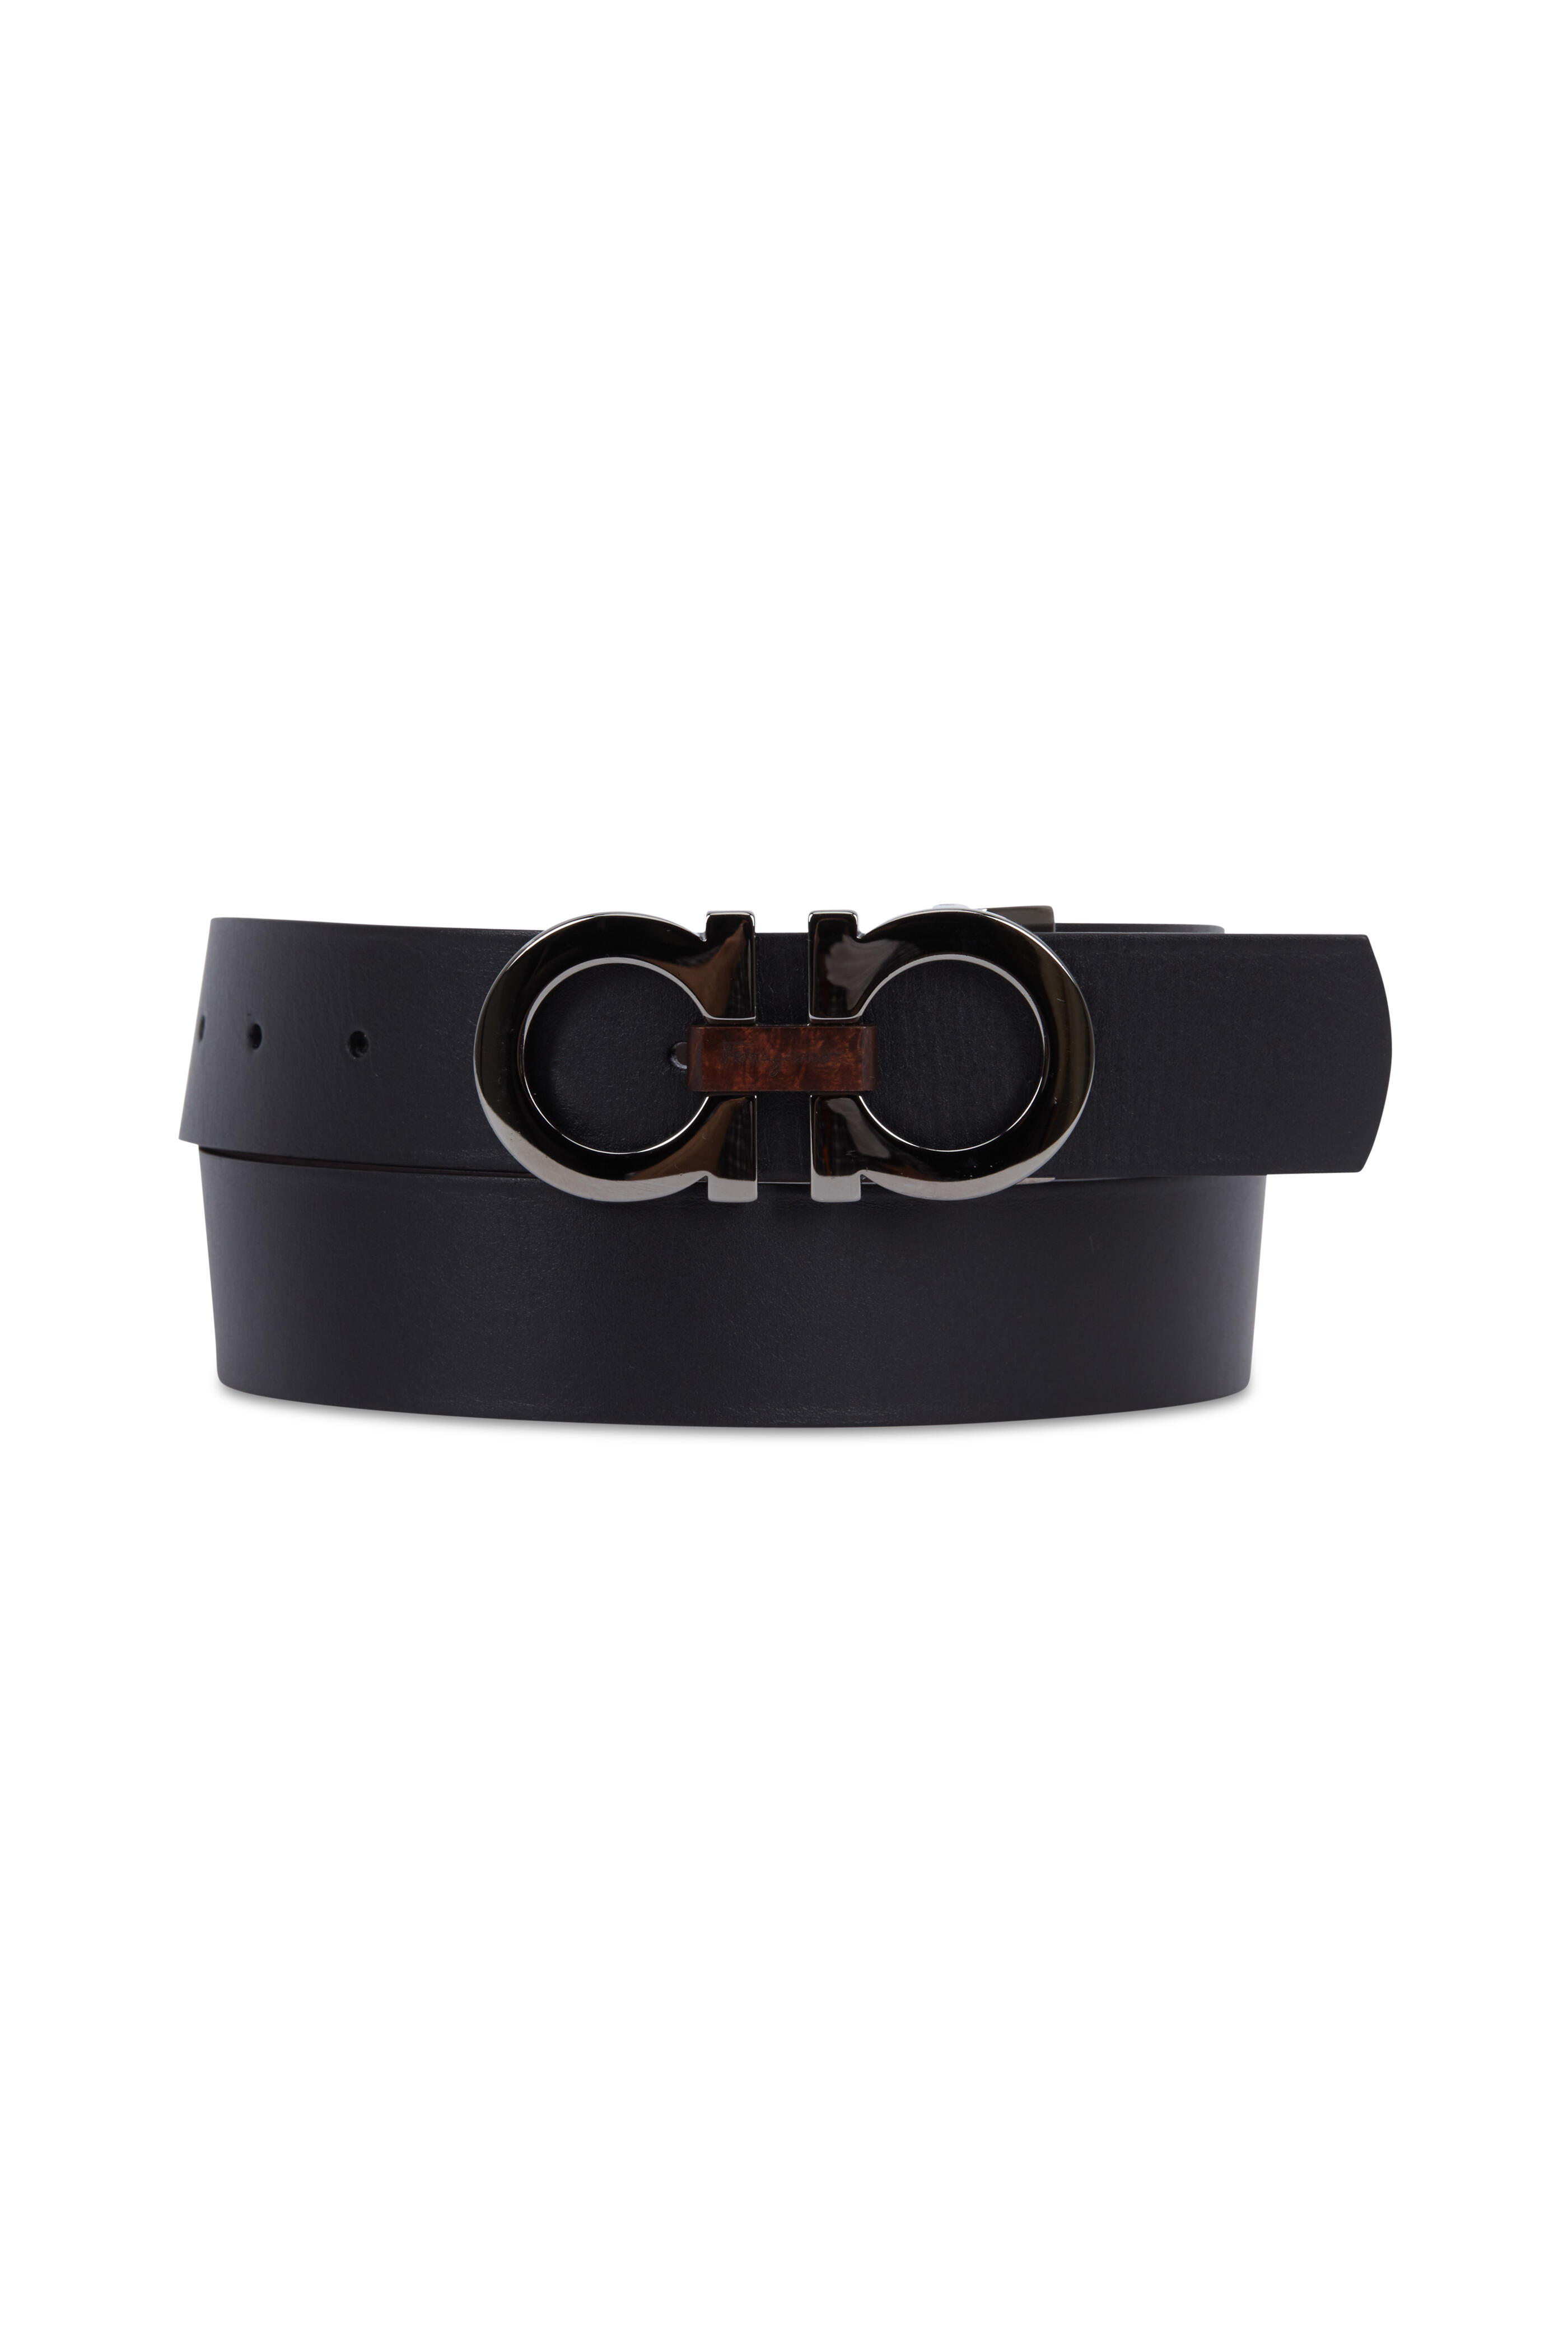 Salvatore Ferragamo Men's Reversible Leather Belt - Black Size 36